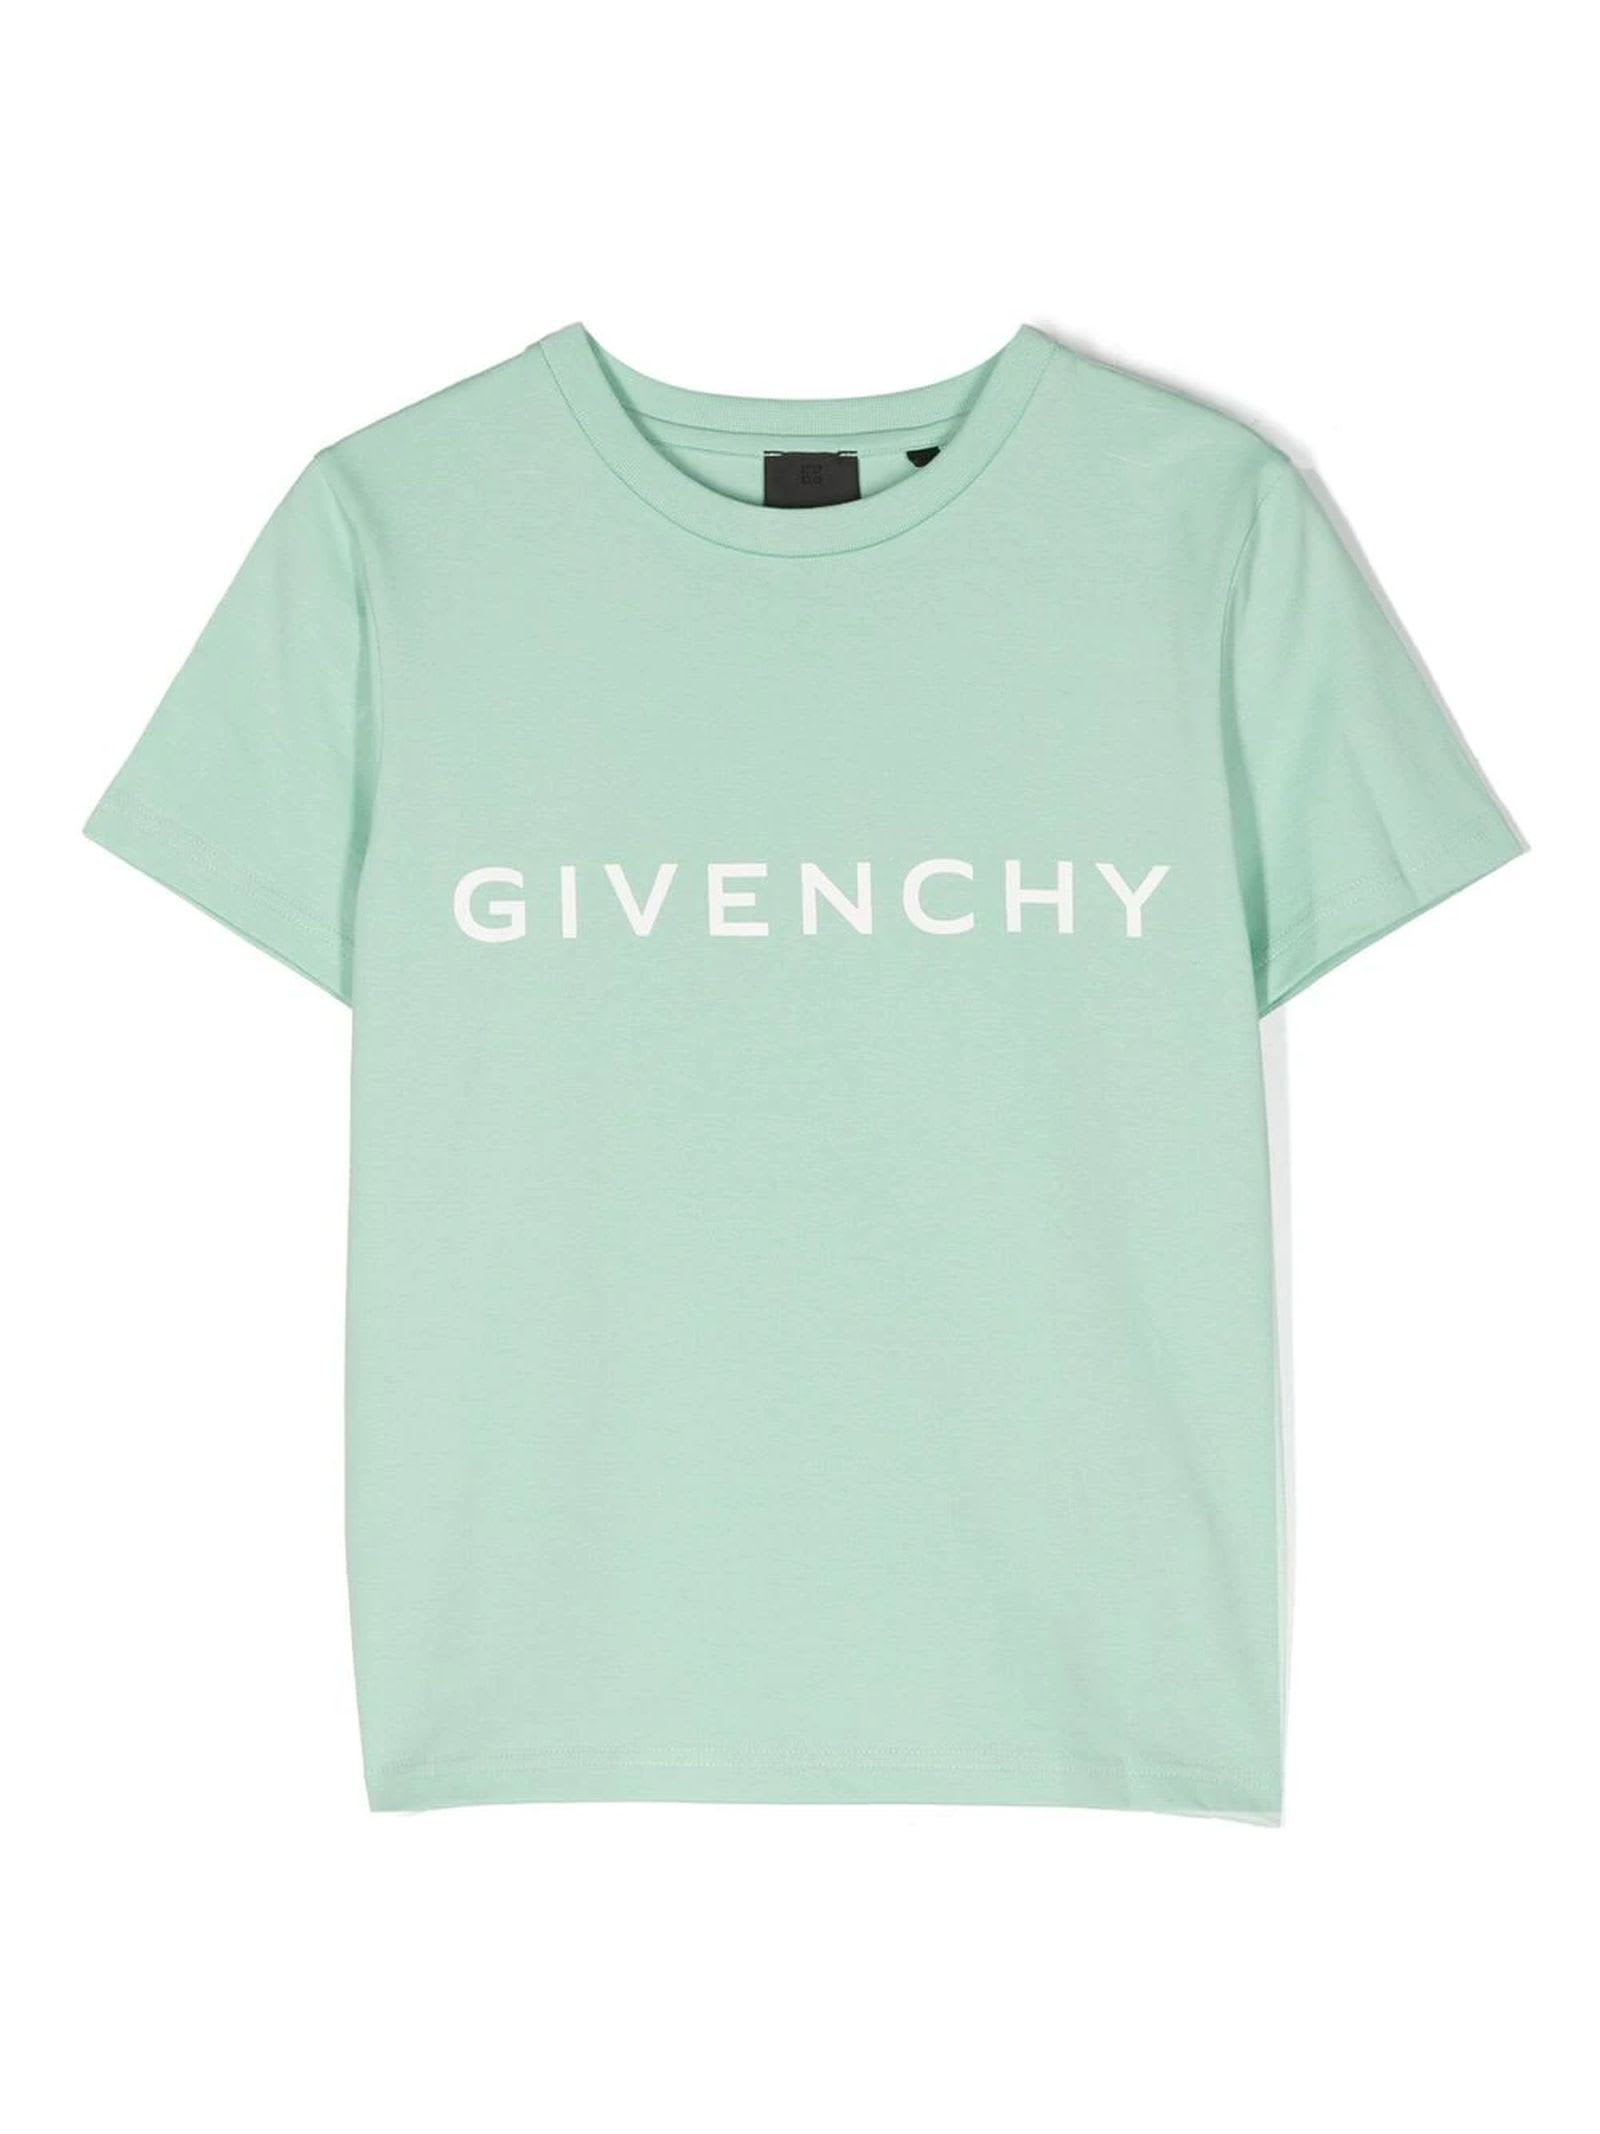 Givenchy Green Cotton Tshirt